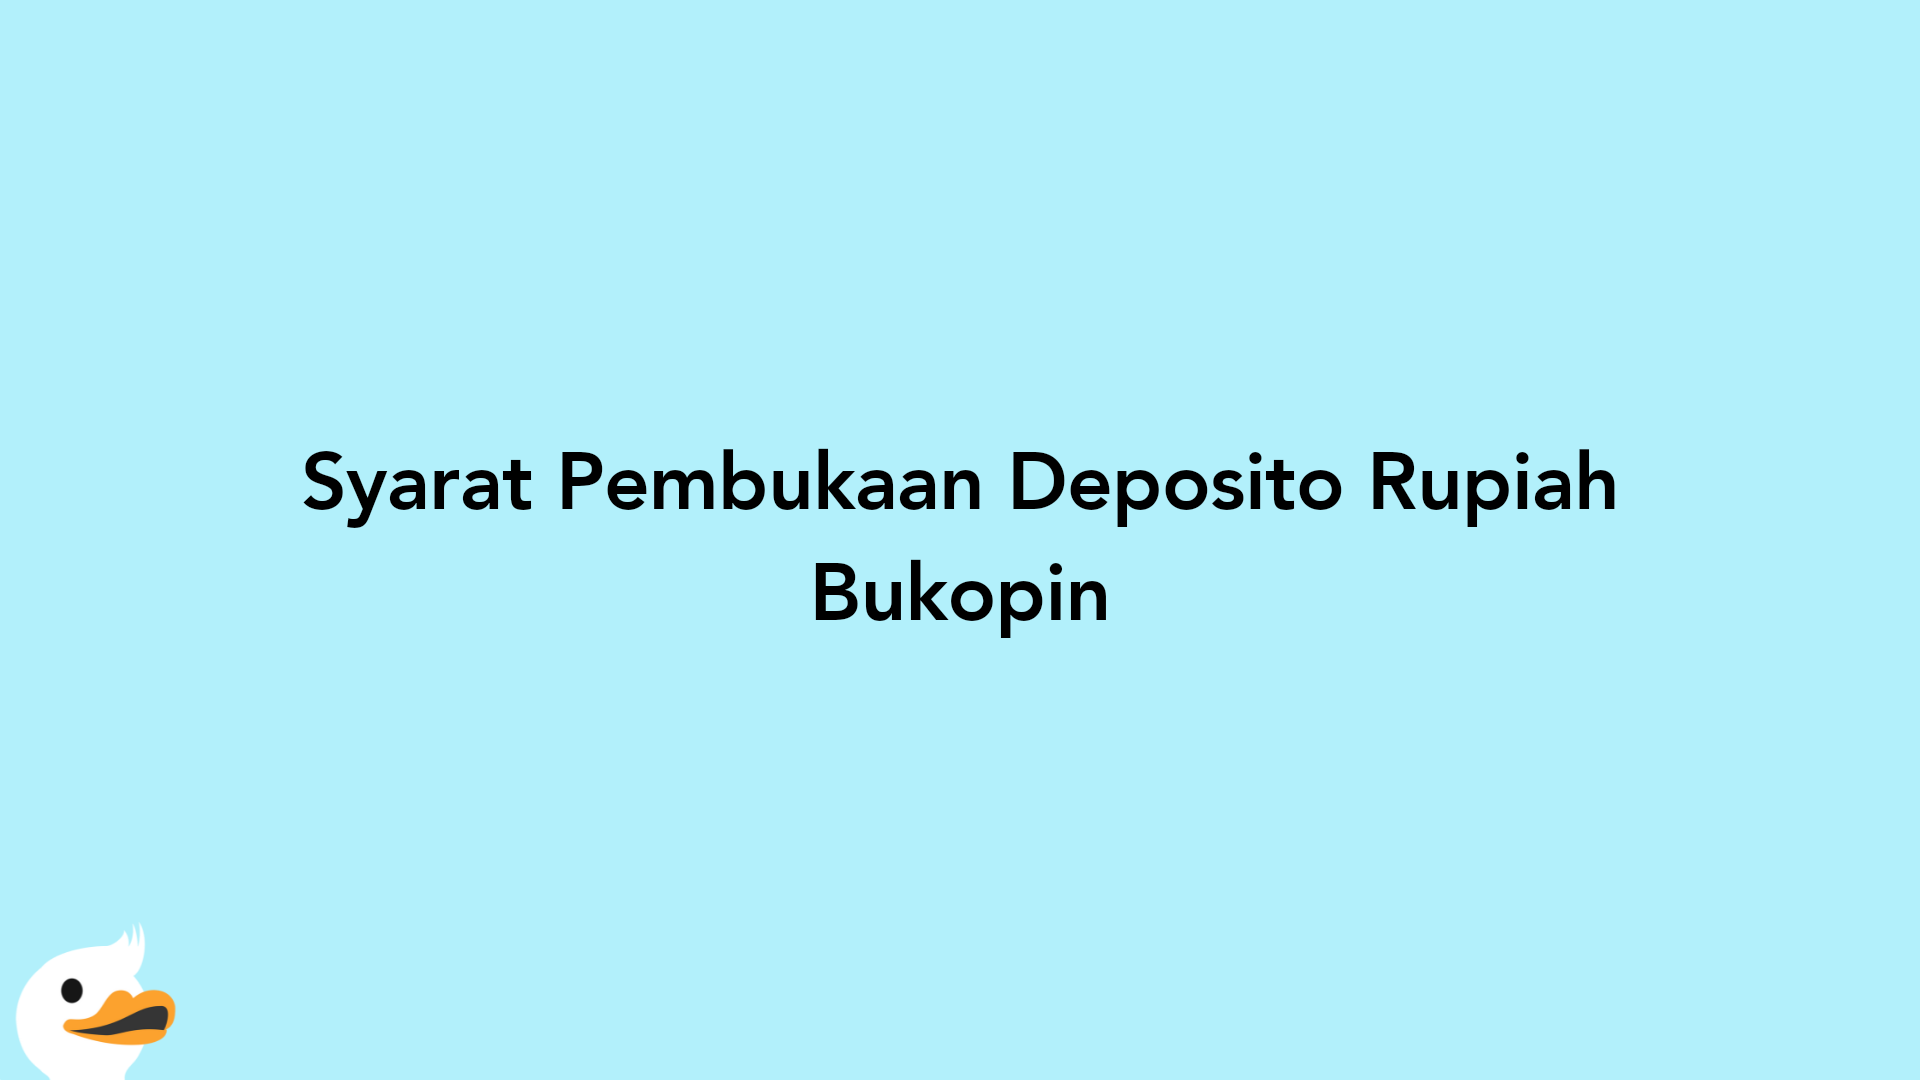 Syarat Pembukaan Deposito Rupiah Bukopin